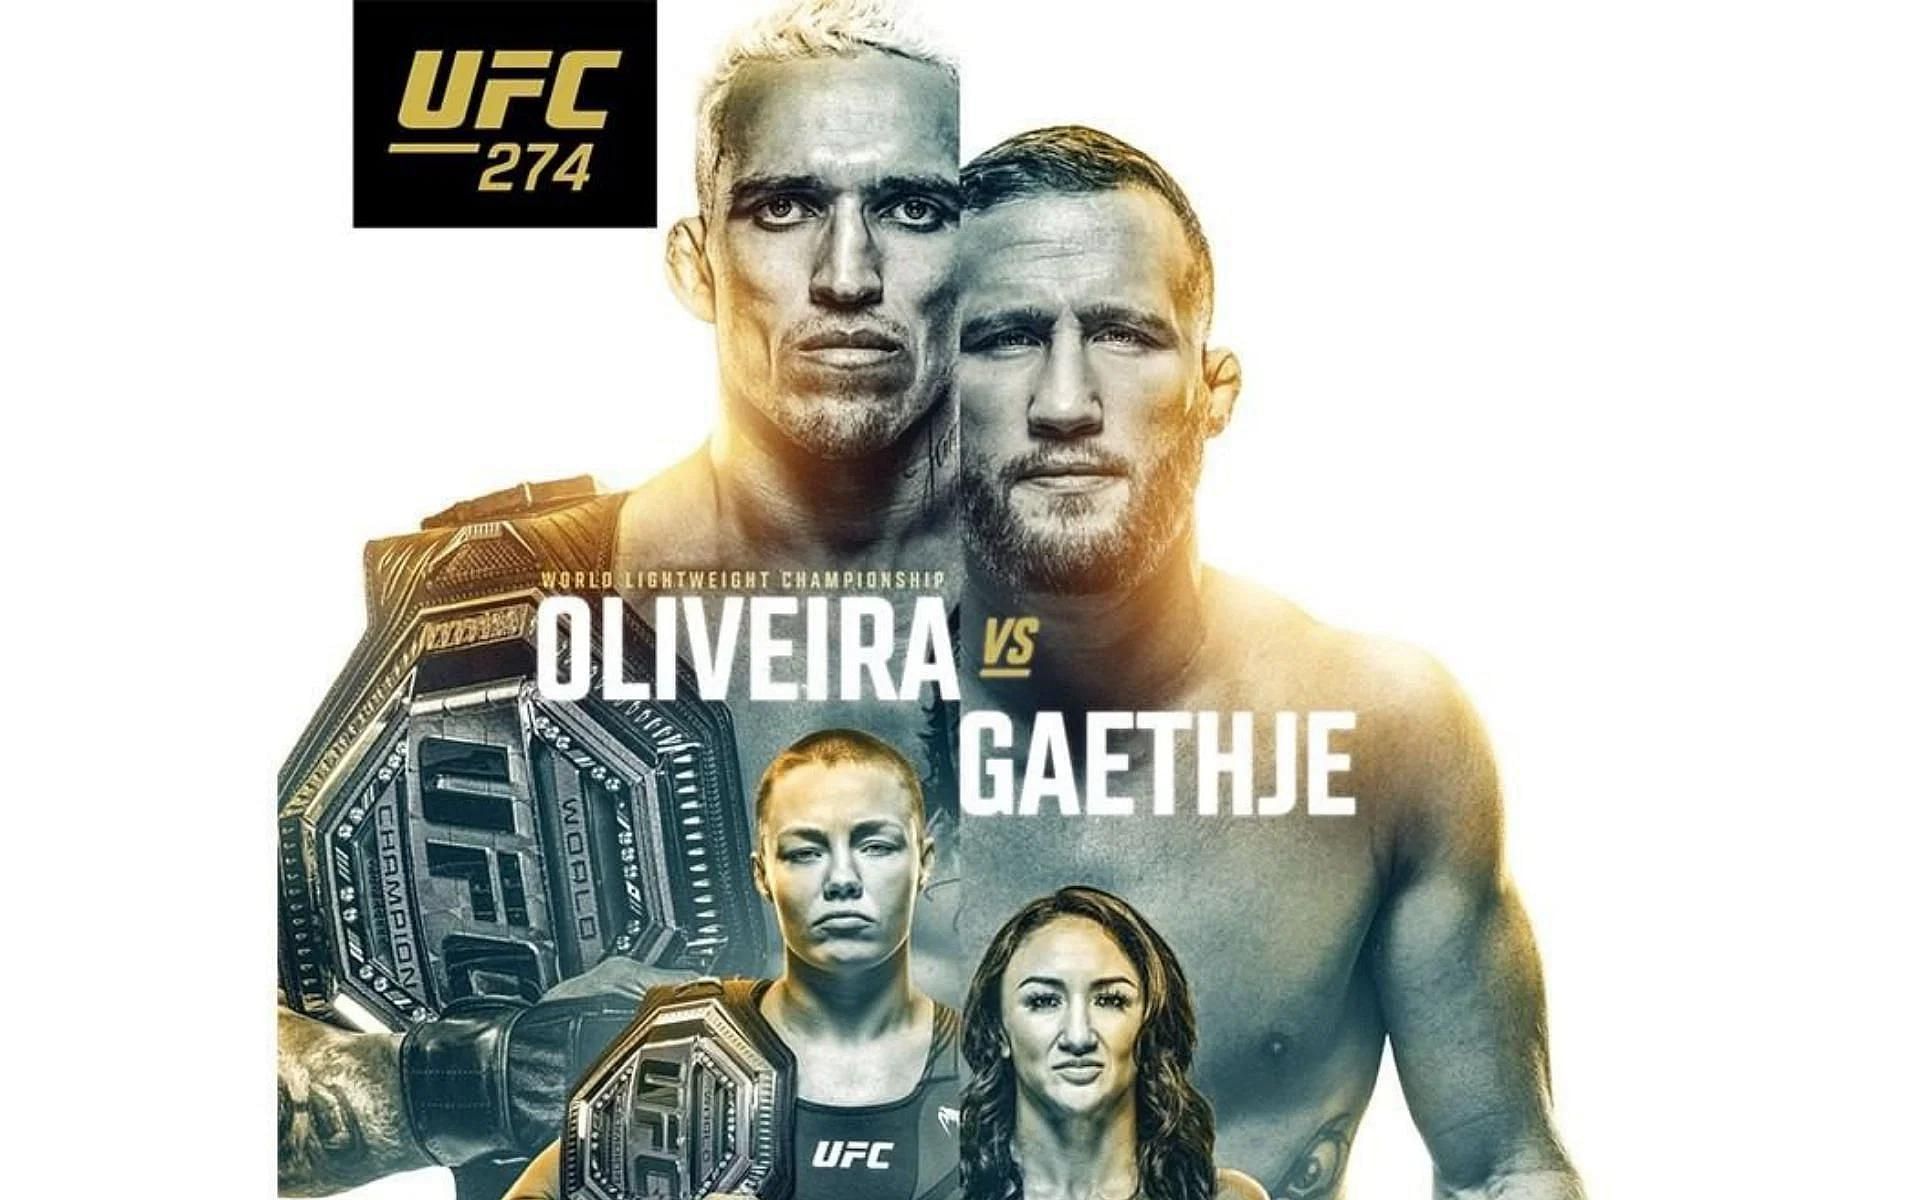 UFC 274 poster [Image credits: @ufc on Instagram]